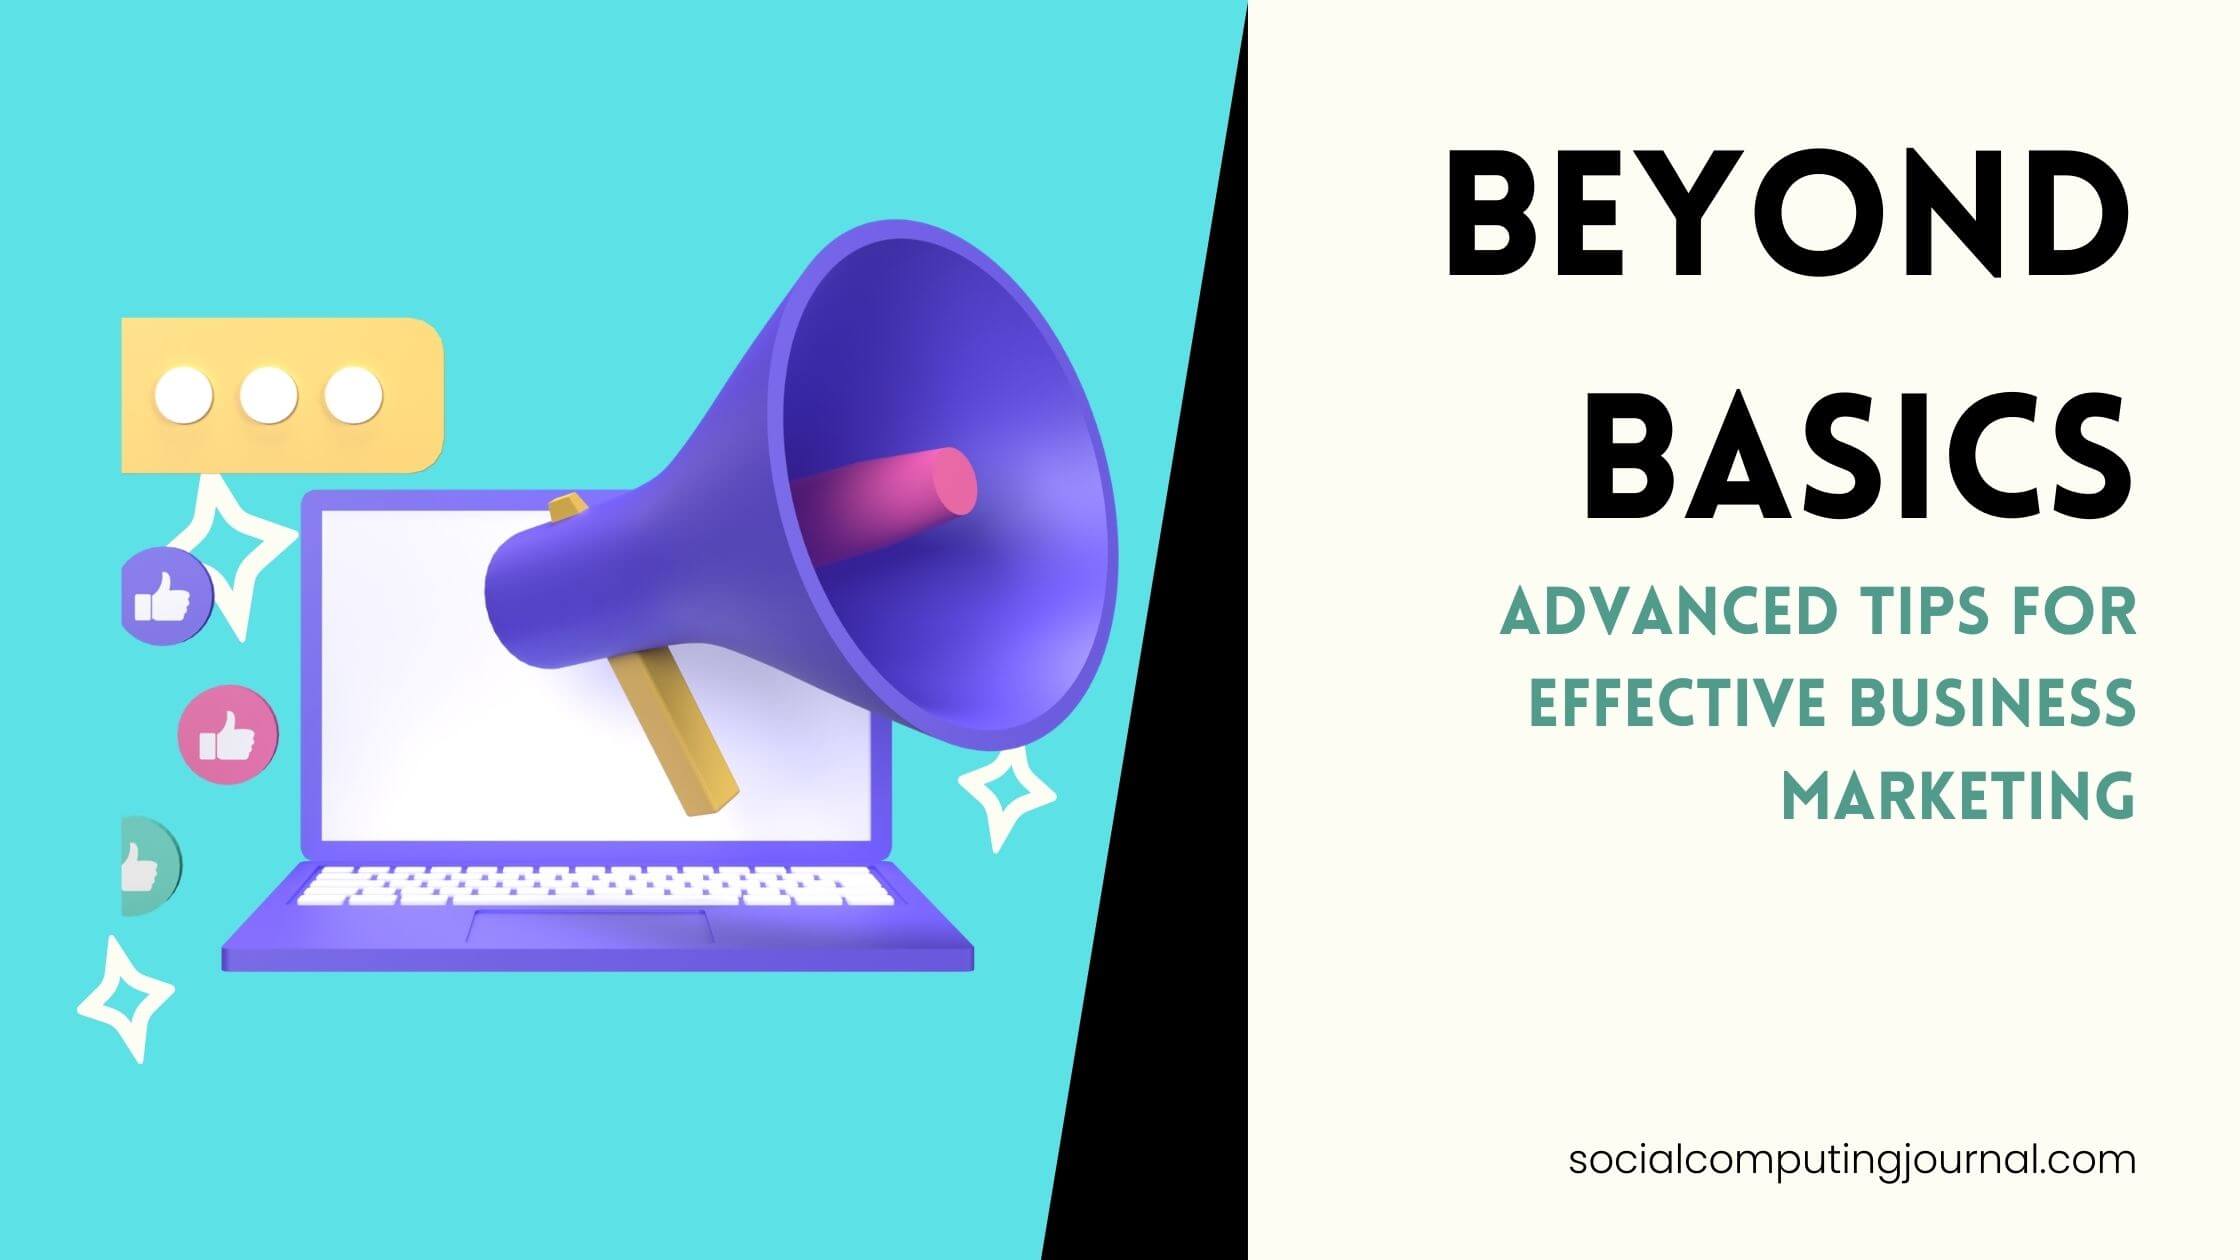 Beyond Basics Advanced Tips for Effective Business Marketing